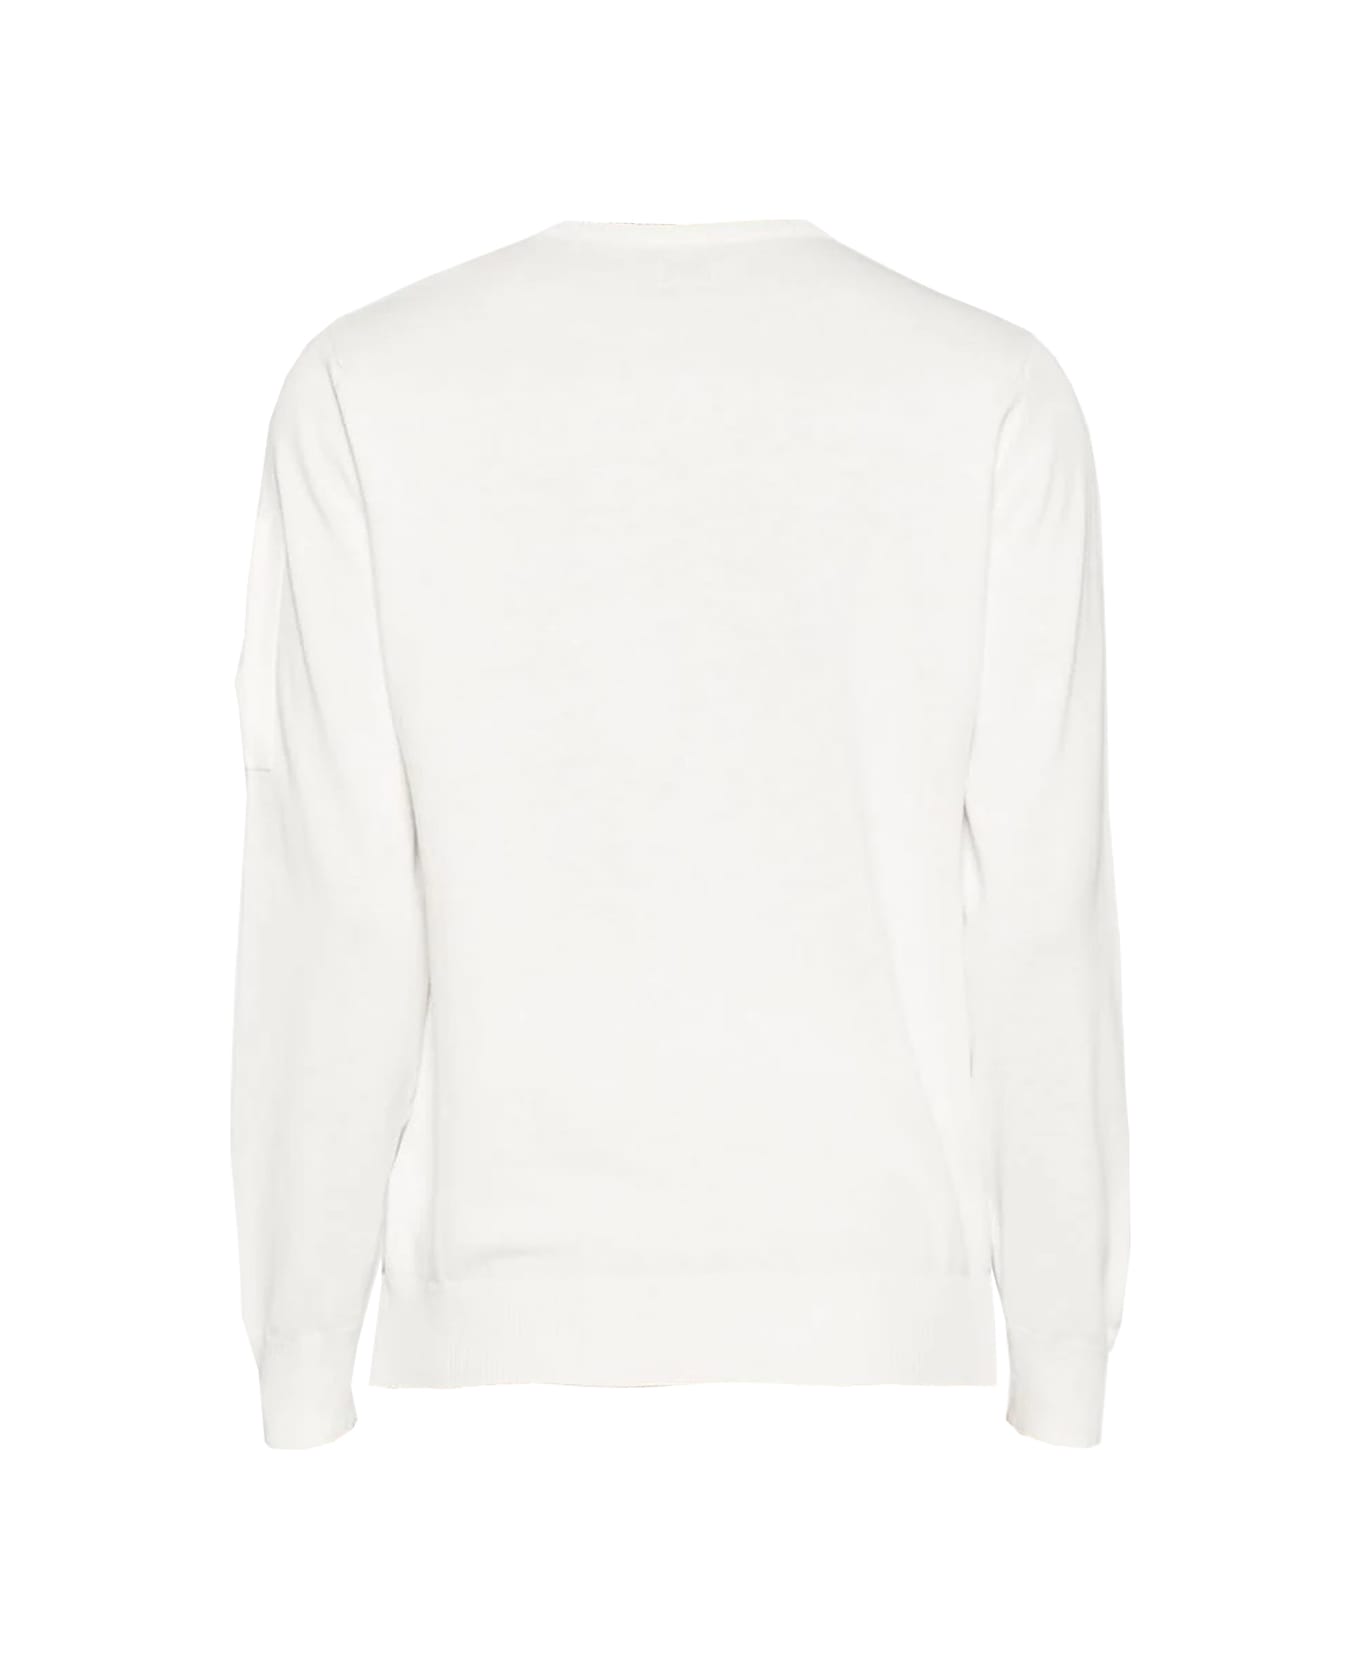 C.P. Company Sweater - White ニットウェア